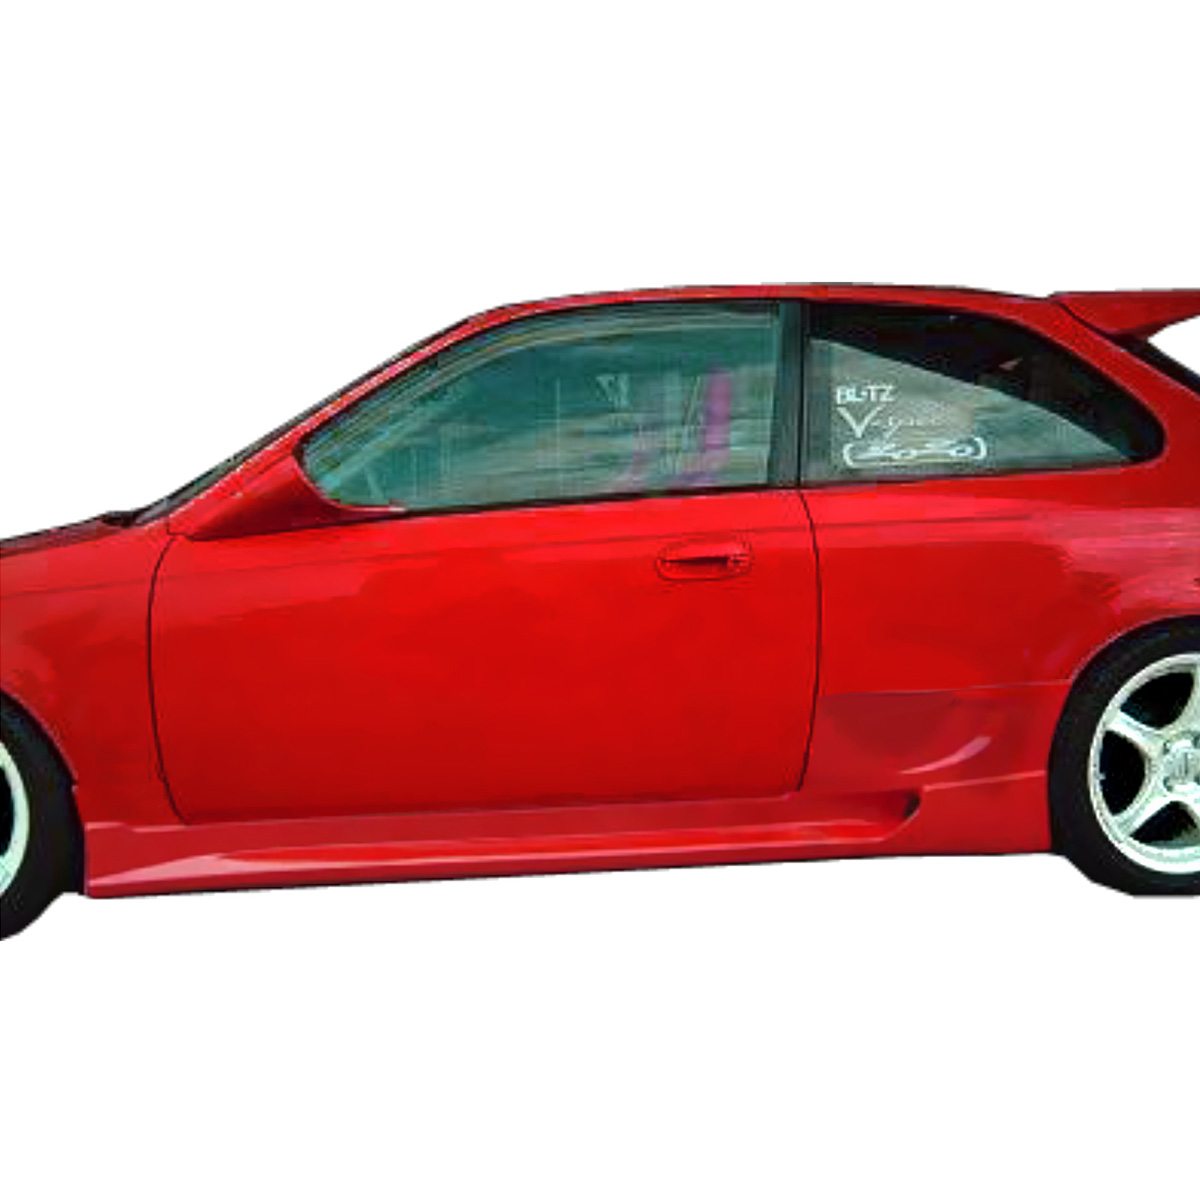 Honda-Civic-Twister-3D-Emb-EBU0409